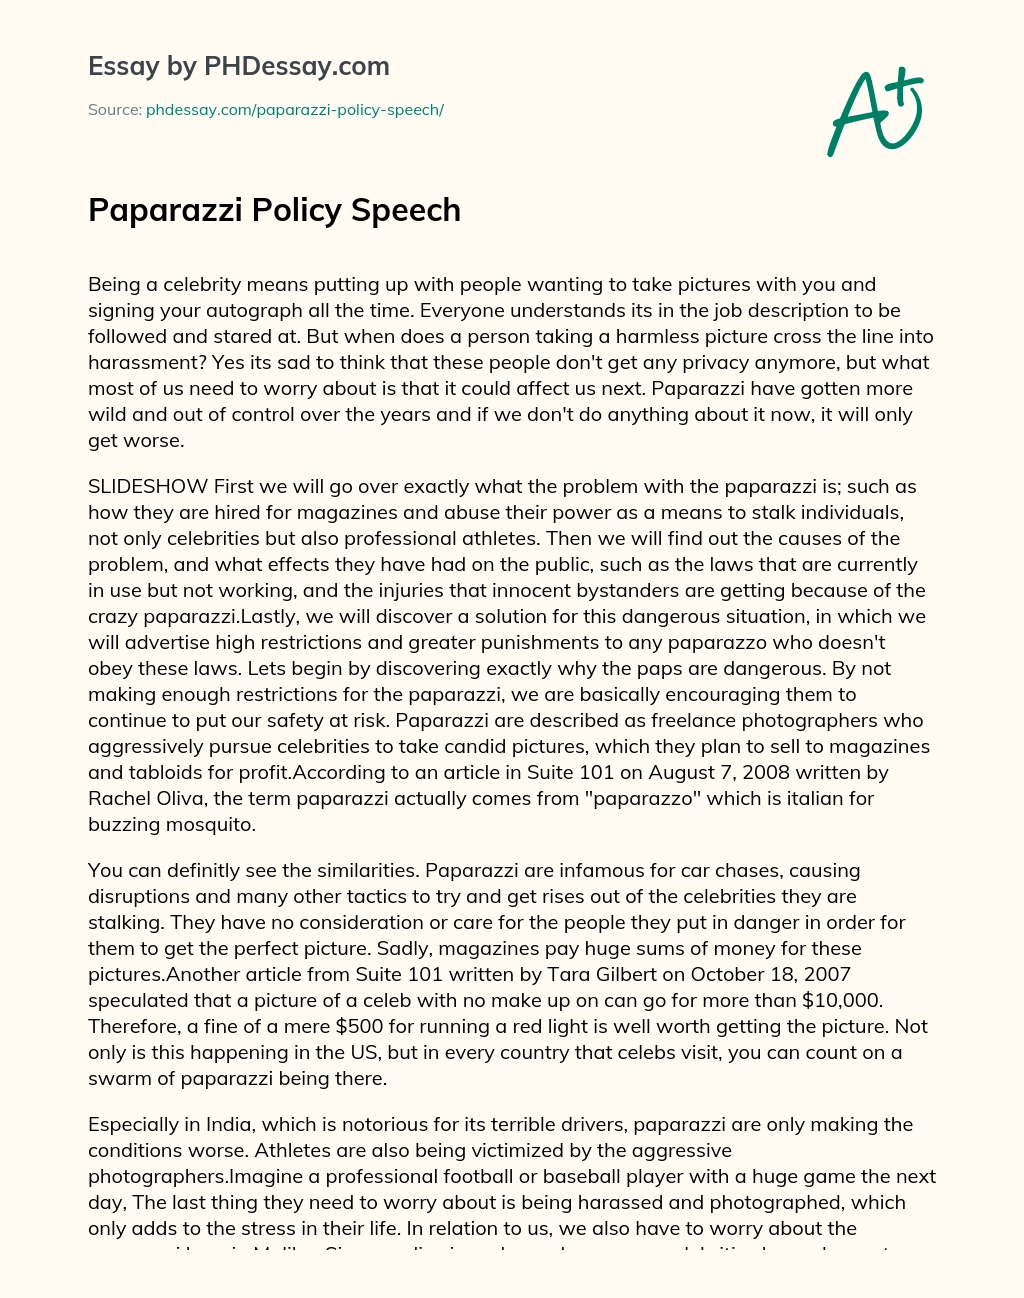 Paparazzi Policy Speech essay